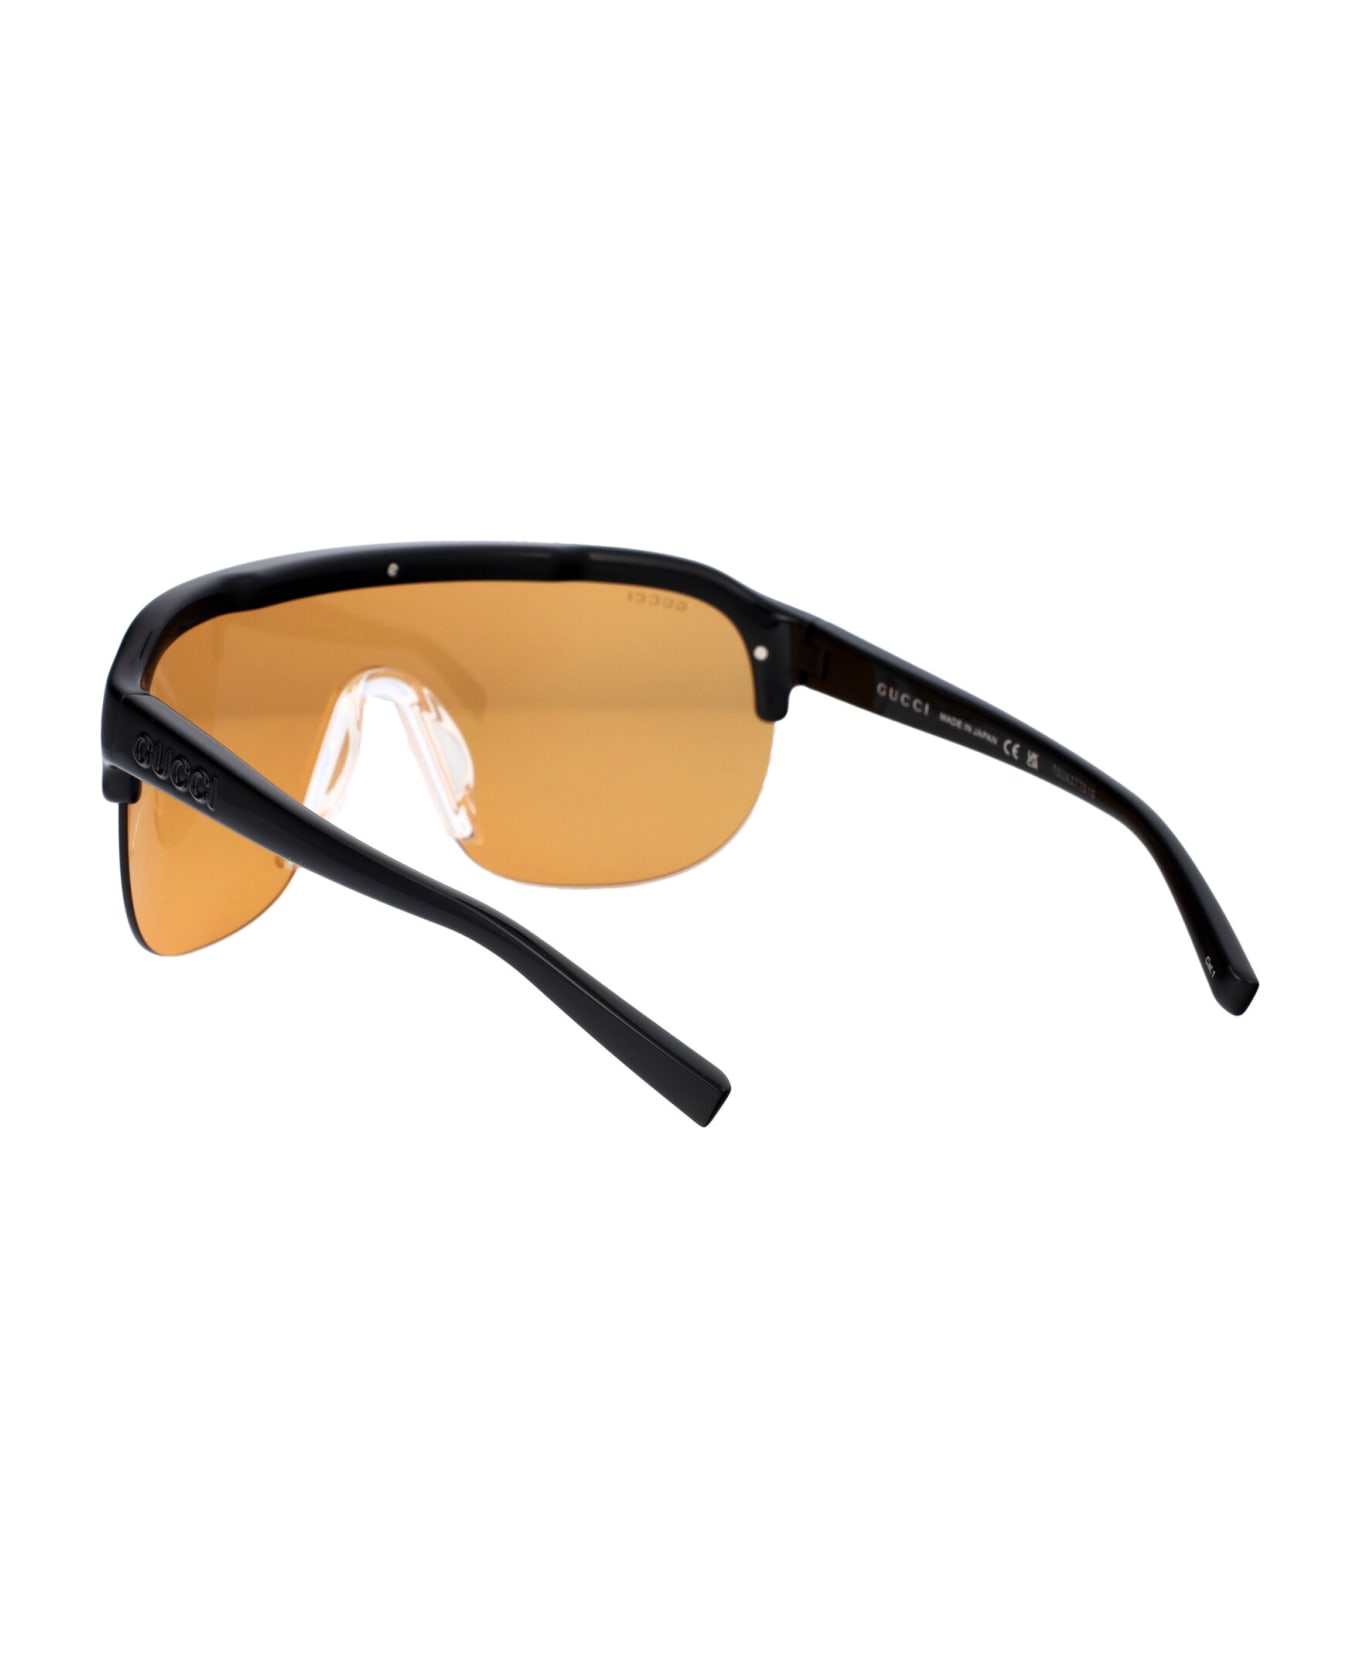 Gucci Eyewear Gg1645s Sunglasses - 005 BLACK BLACK ORANGE